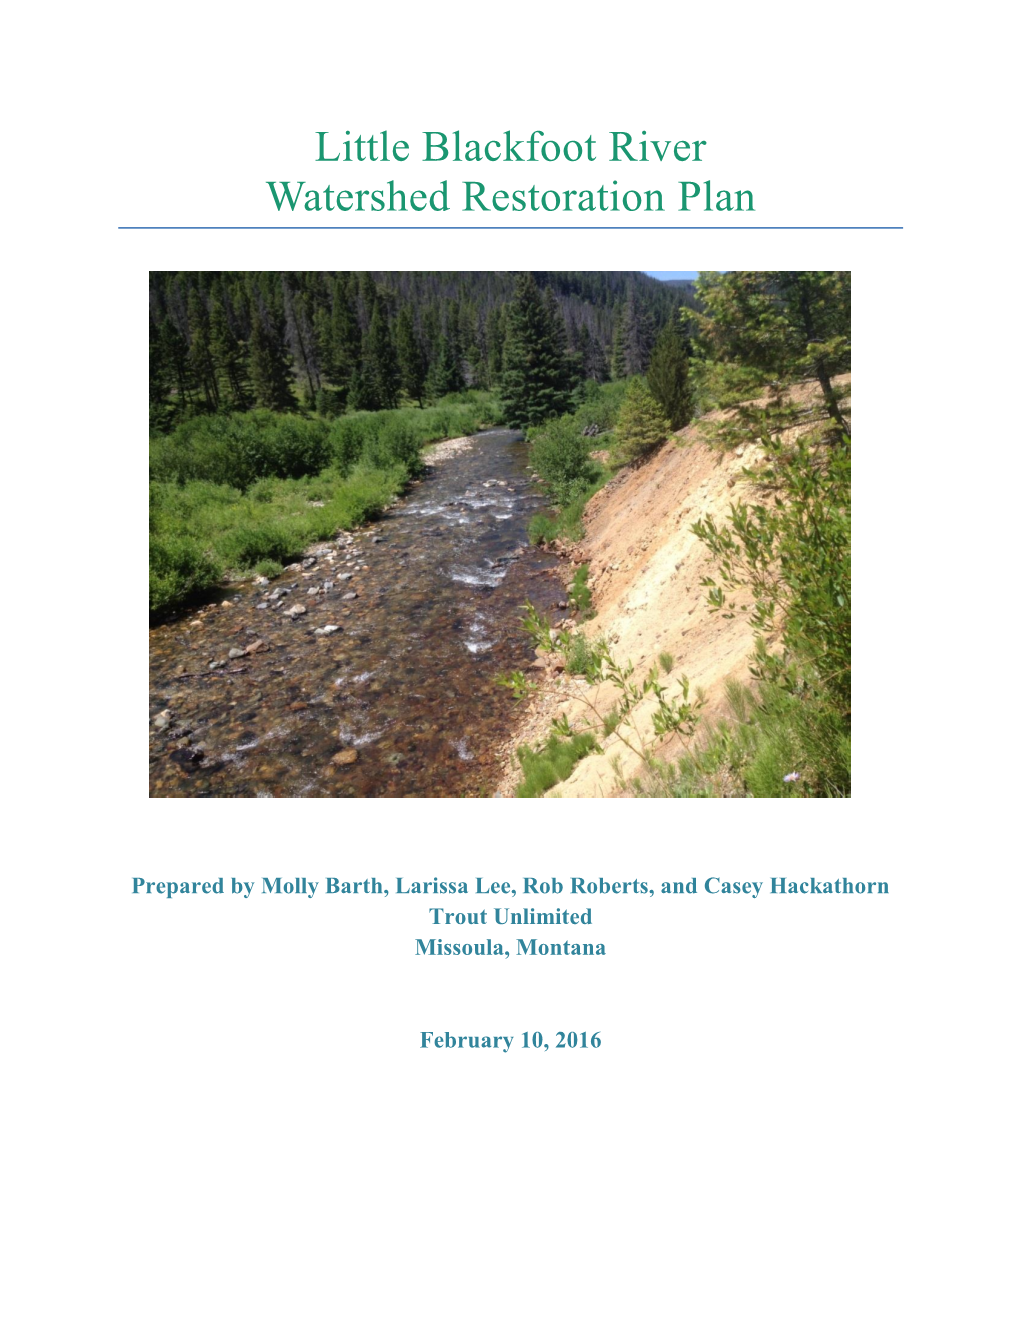 Little Blackfoot River Watershed Restoration Plan